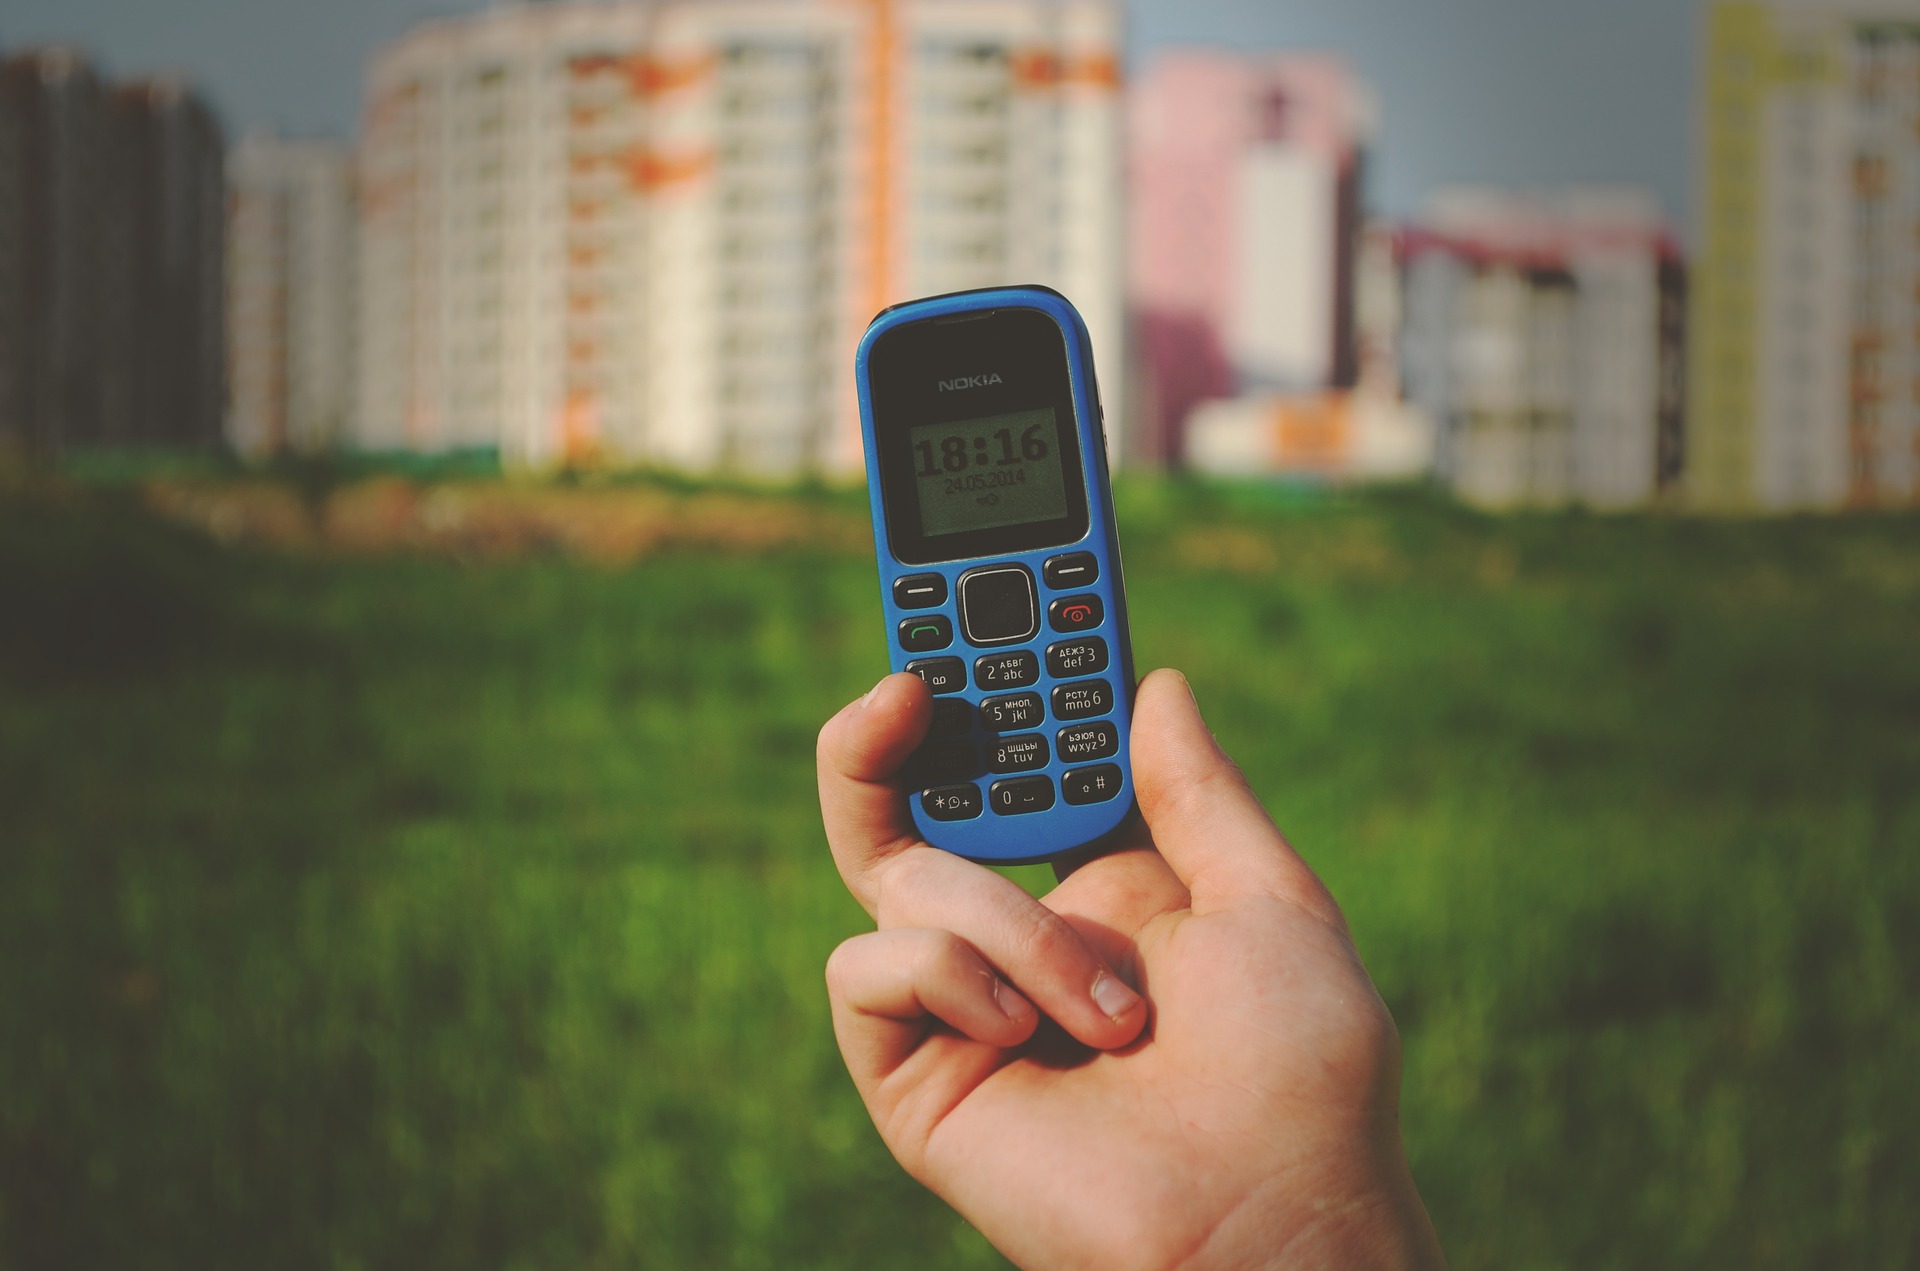 Nokia, de vender emblemáticos celulares a destacar en telecomunicaciones